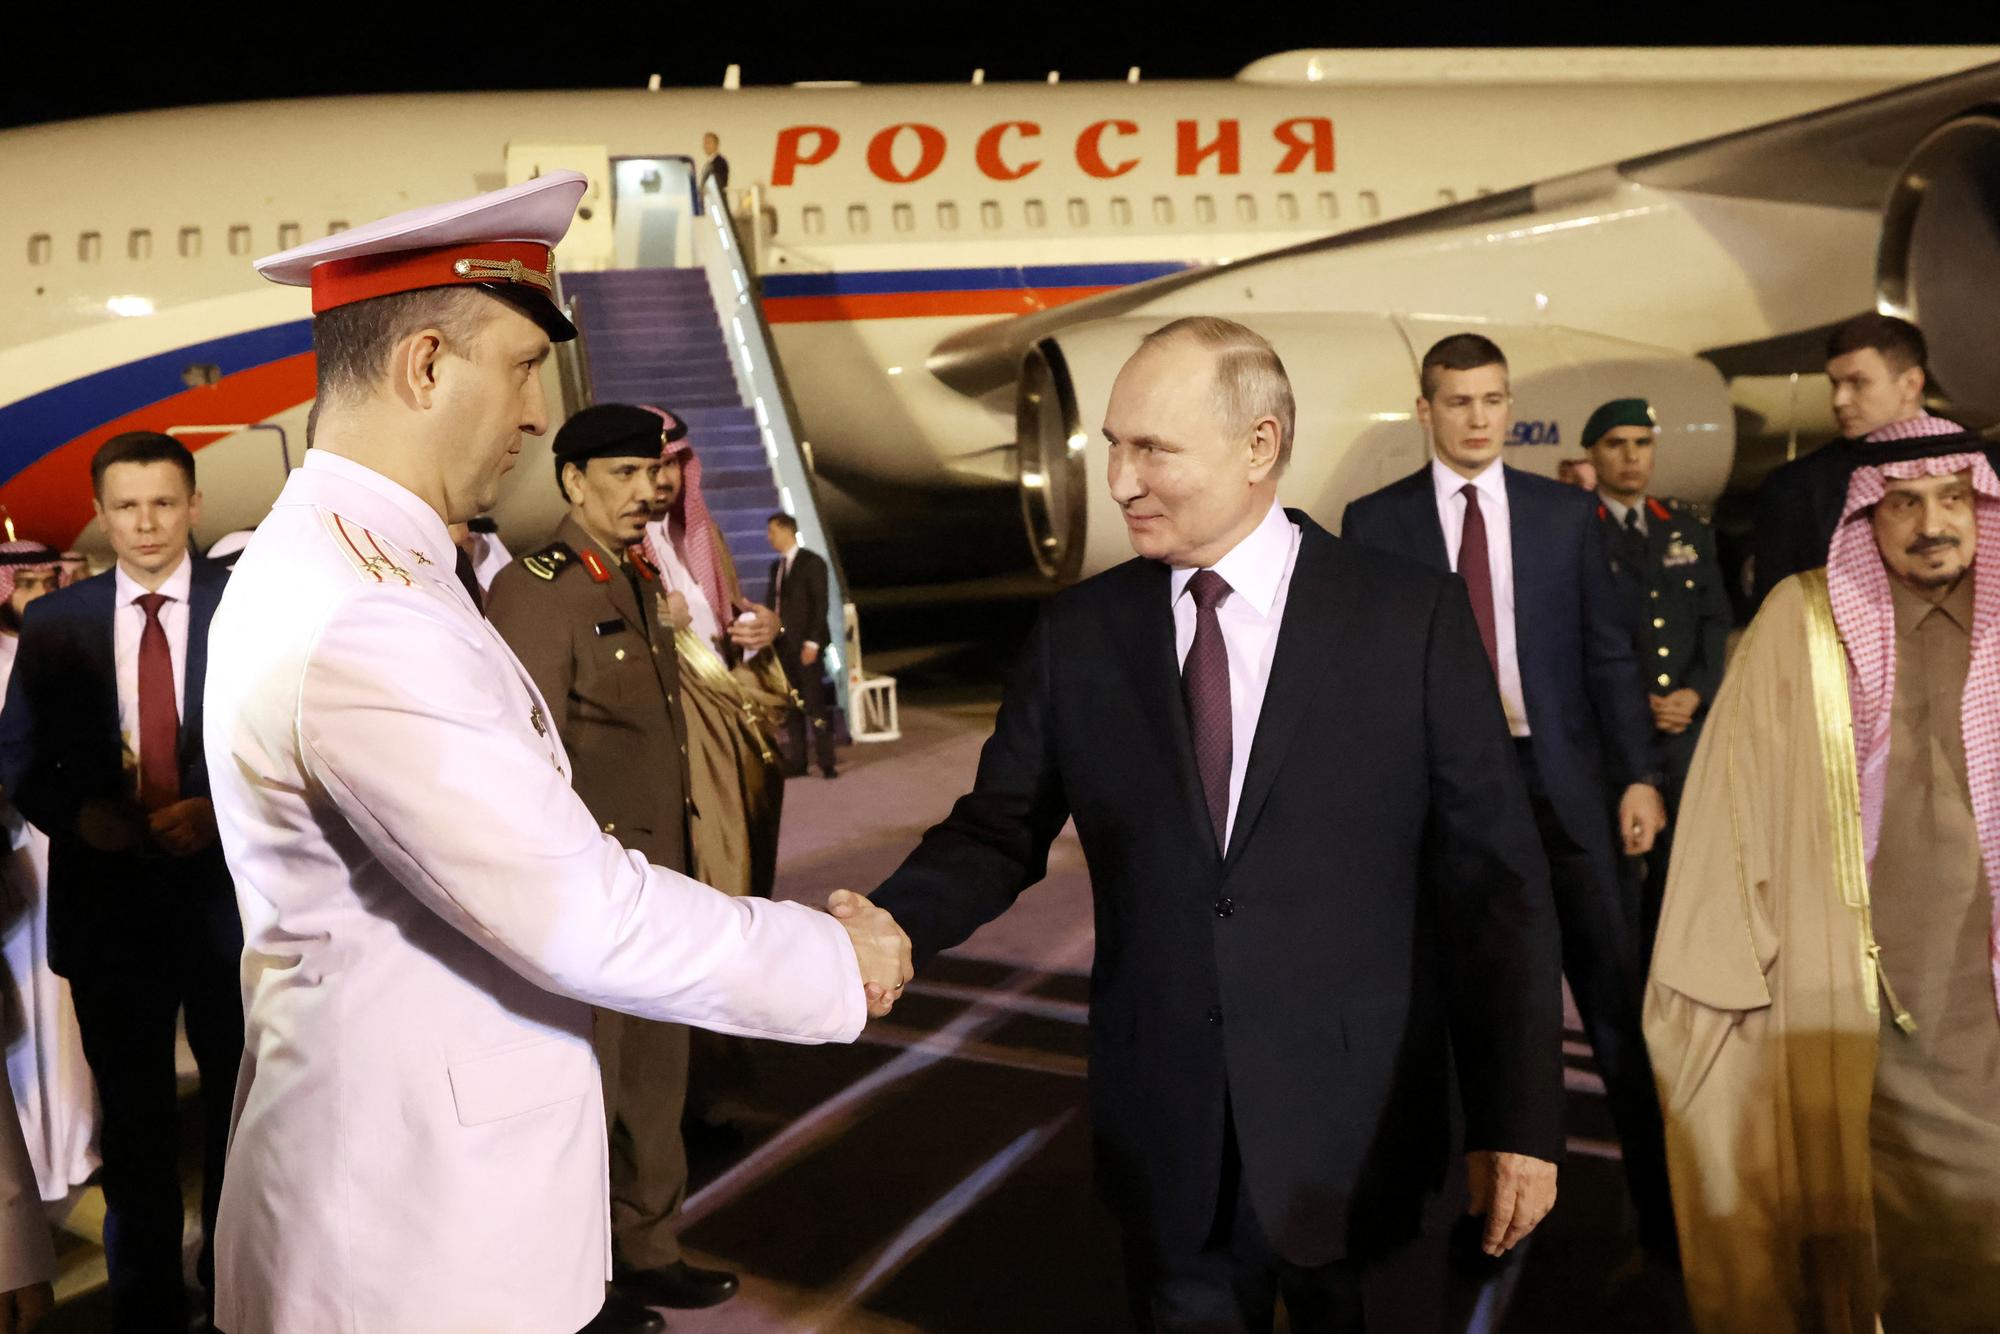 Vladimir Poutine à son arrivée en Arabie Saoudite mercredi. [Sputnik / Pool via reuters - Konstantin Zavrazhin]